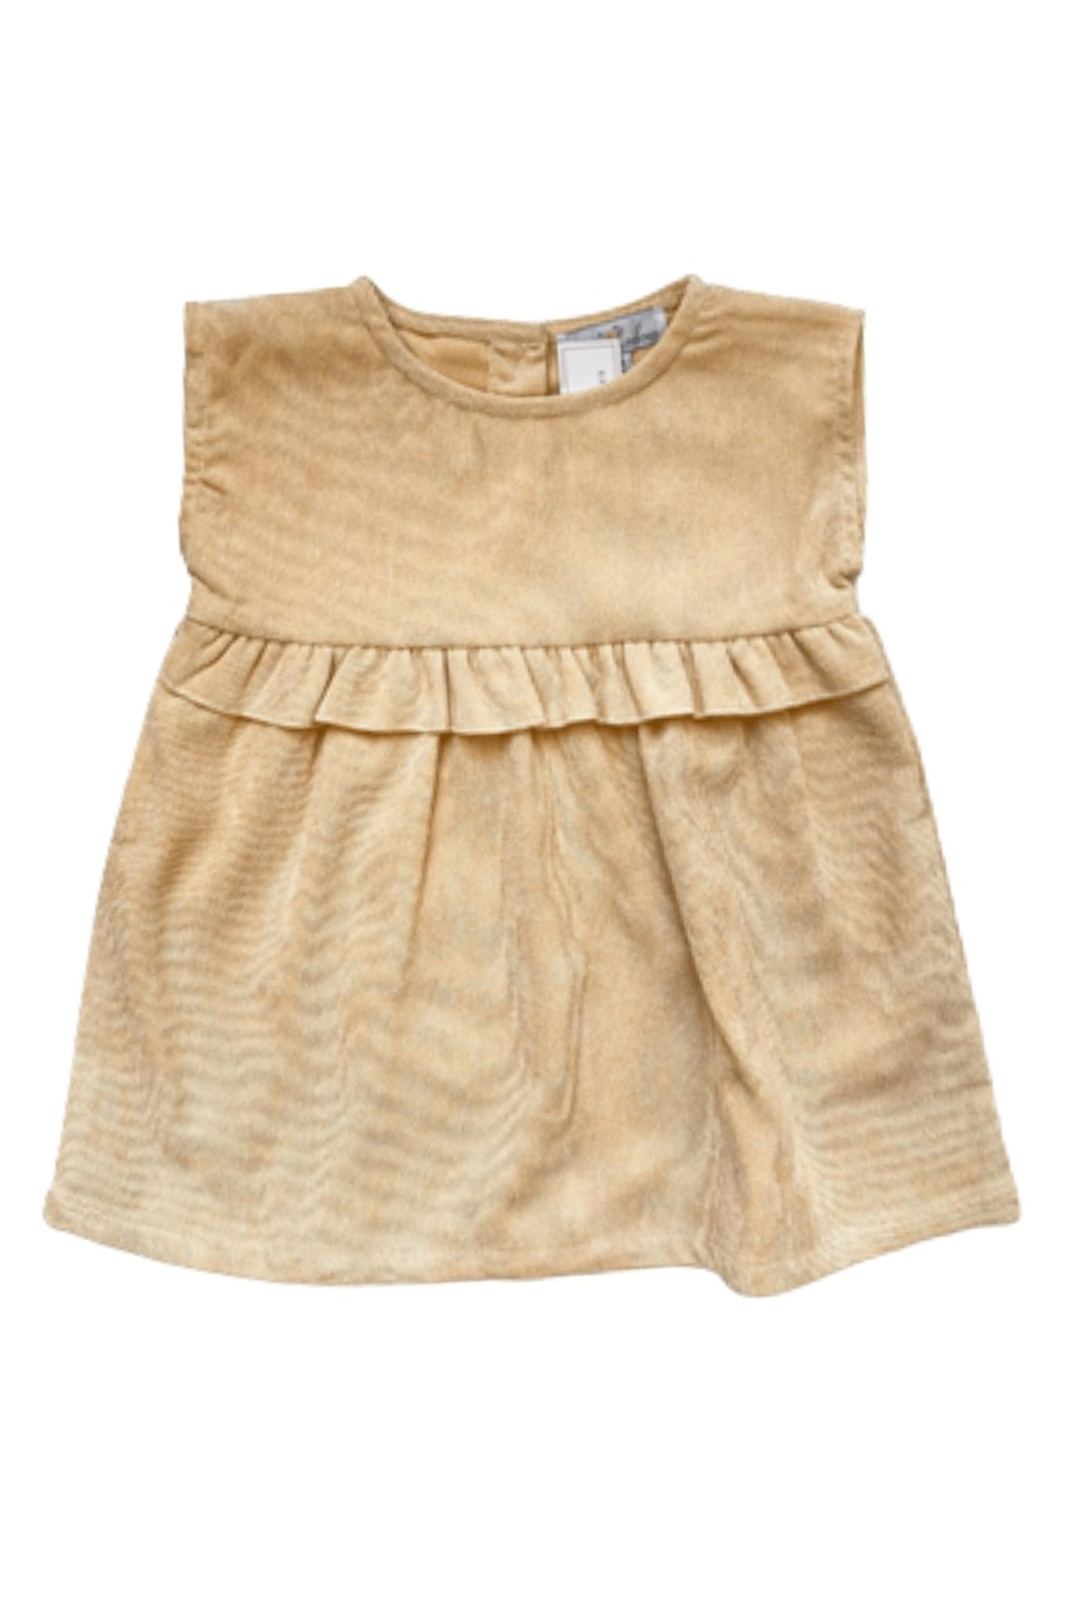 Hanna Ruffle Front Sleeveless Shorty Dress - Tea for Three: A Children's Boutique-New Arrivals-TheT43Shop